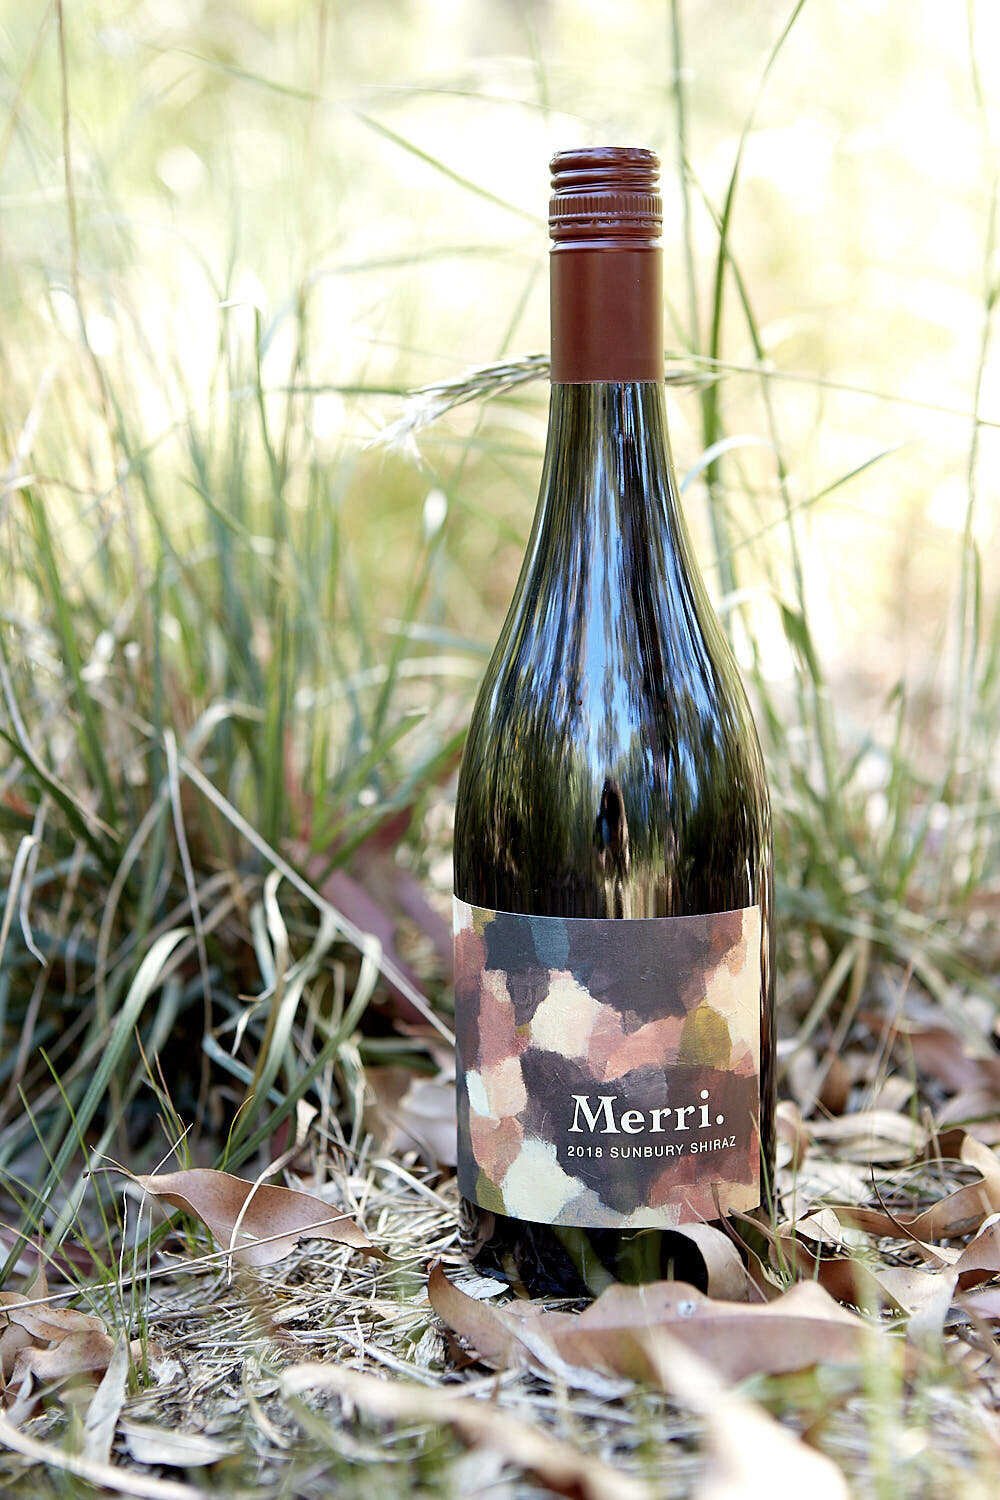    Merri Shiraz   Wine Collaboration Hair Arm Wine Co.  Released 2020 Photo: Daniel Mahon 